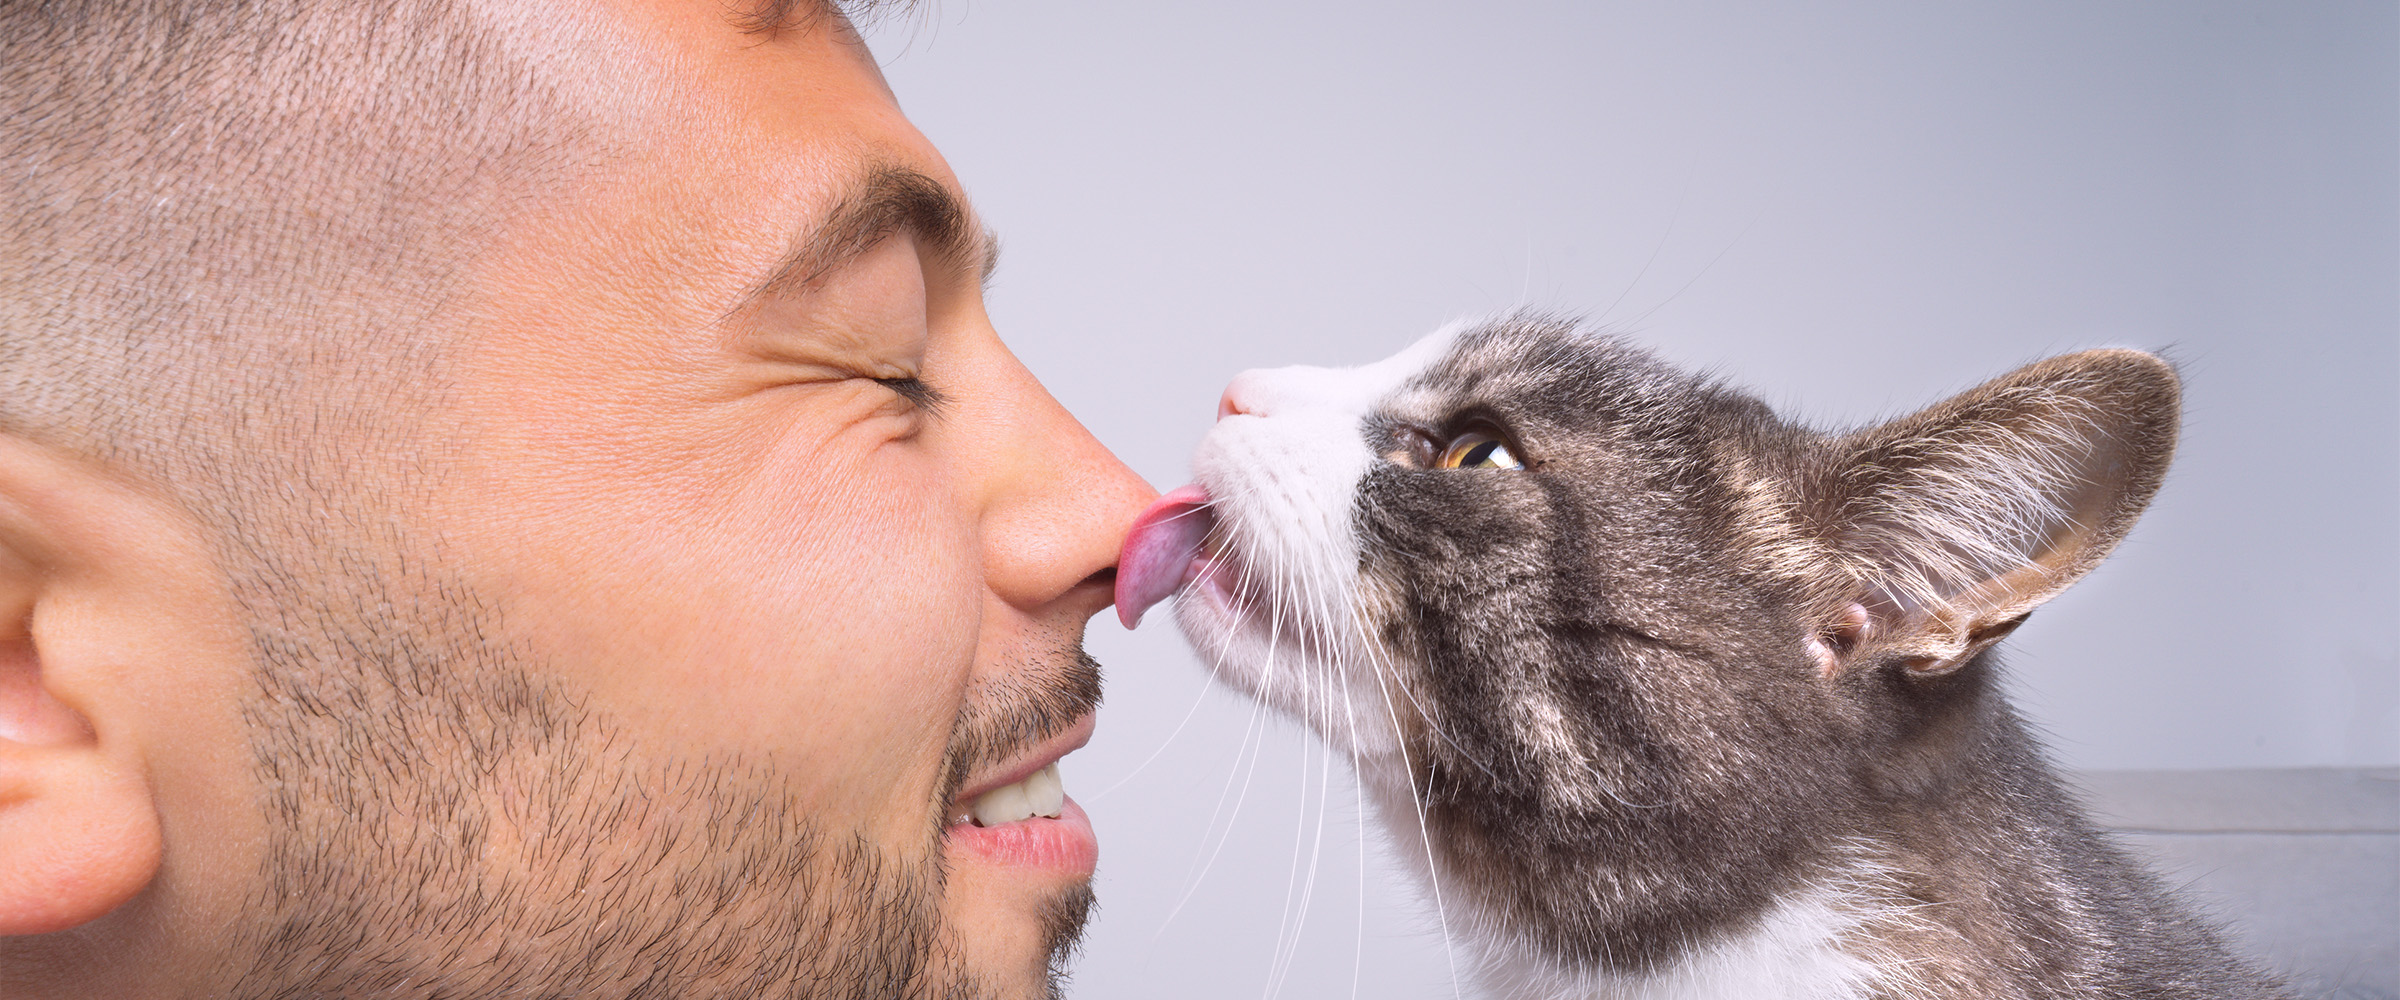 d_Why cats lick humans_4-1